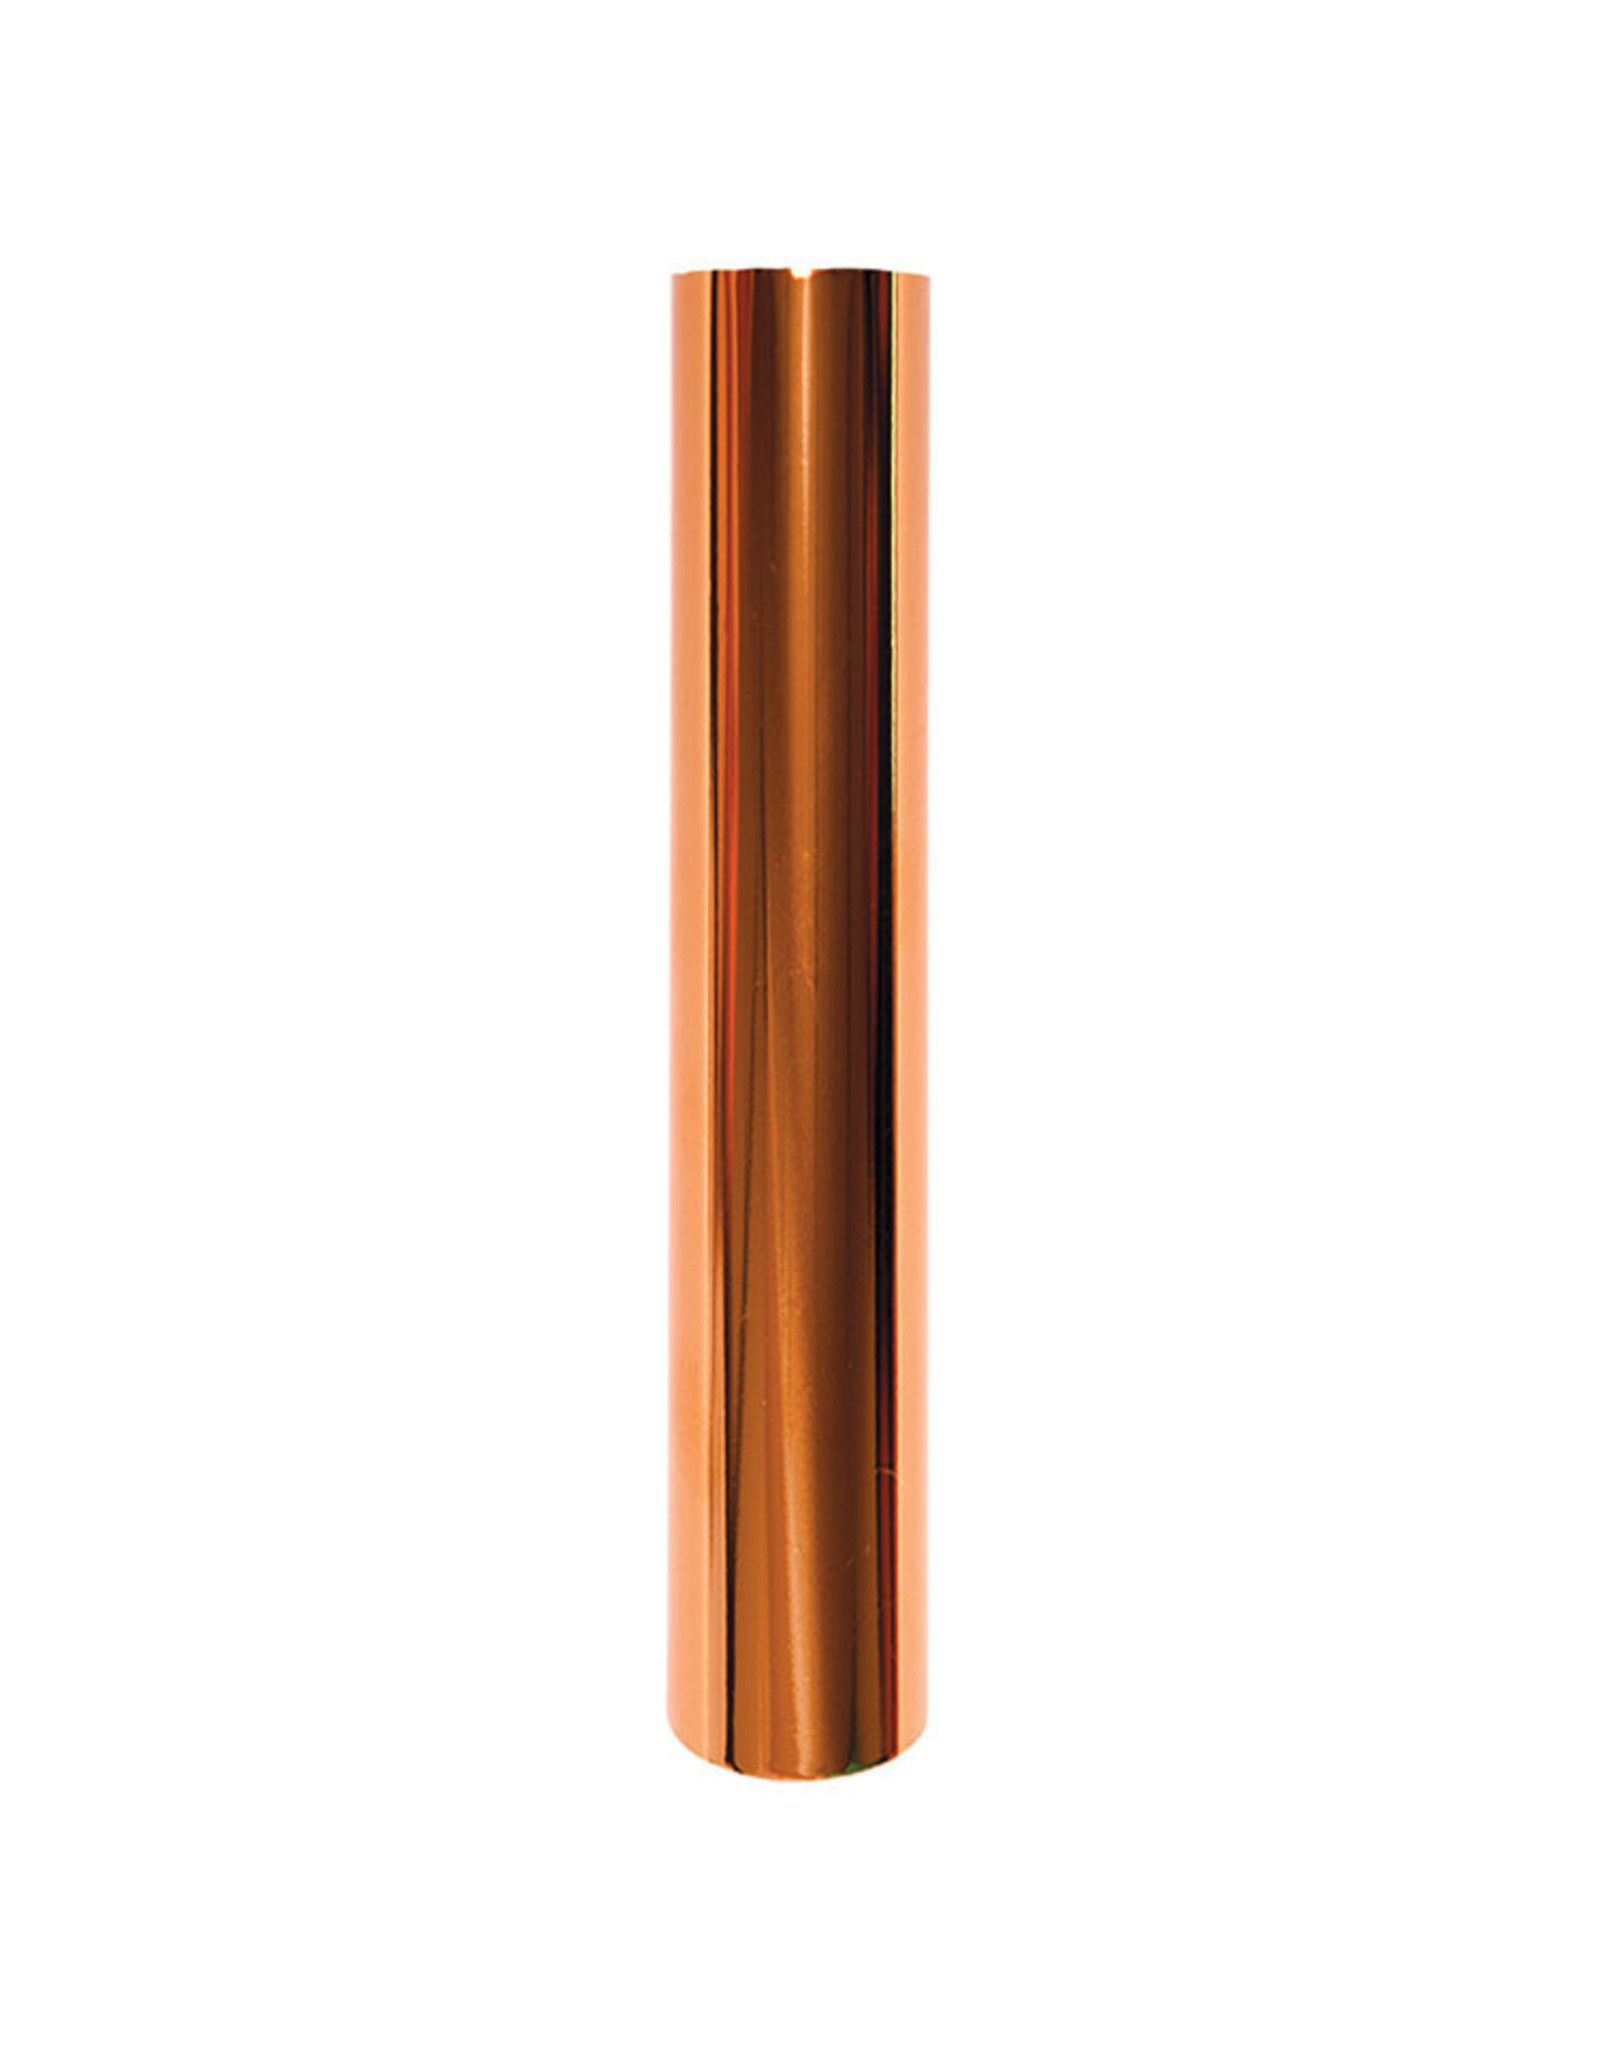 Spellbinders Glimmer Hot Foil - Copper